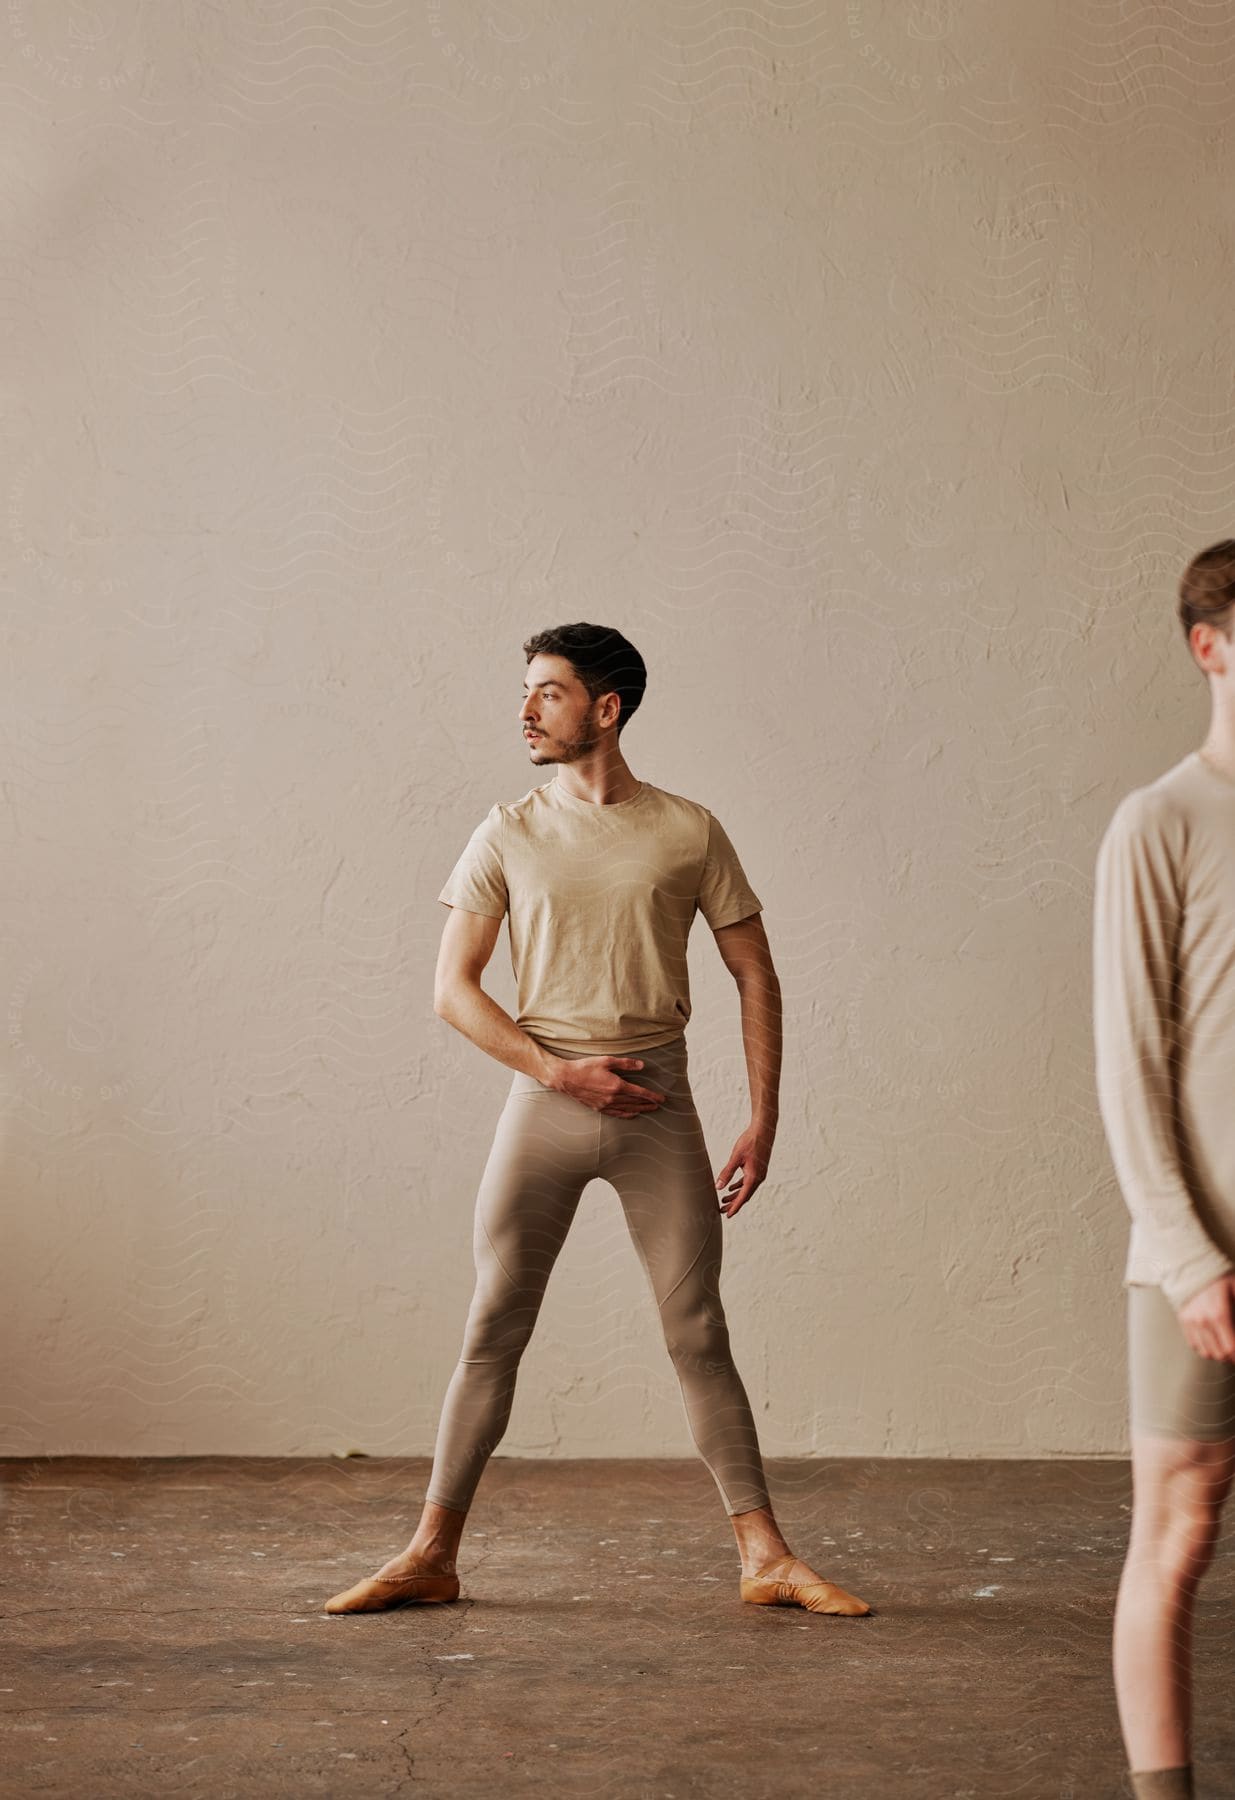 Male ballet dancer looks to the left